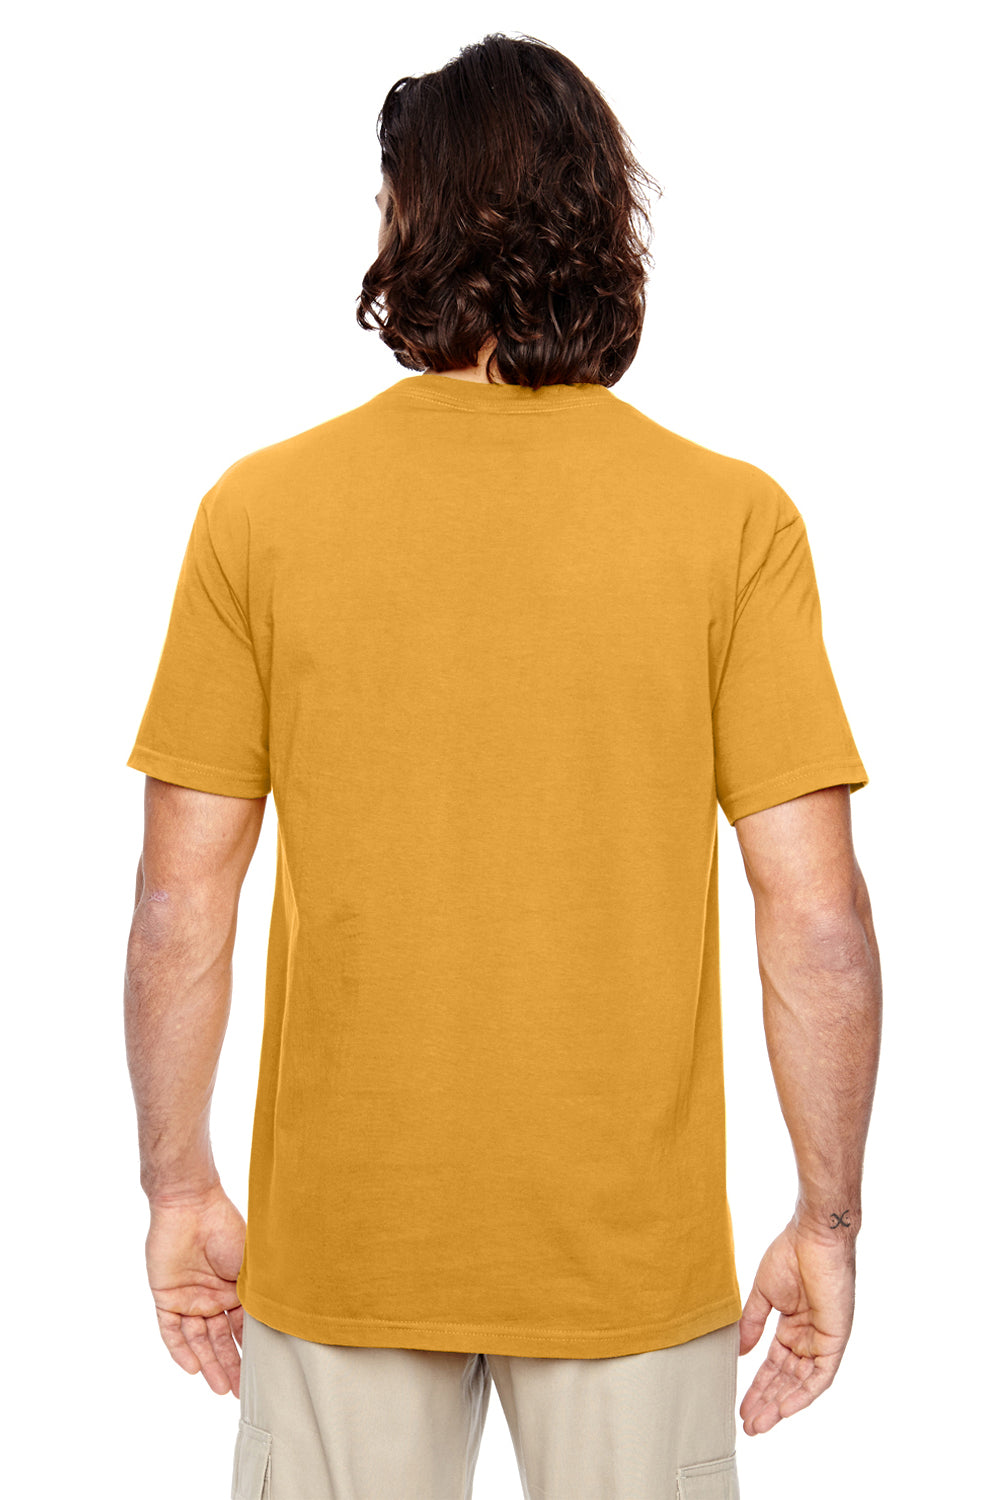 Econscious EC1000 Mens Short Sleeve Crewneck T-Shirt Beehive Yellow Back